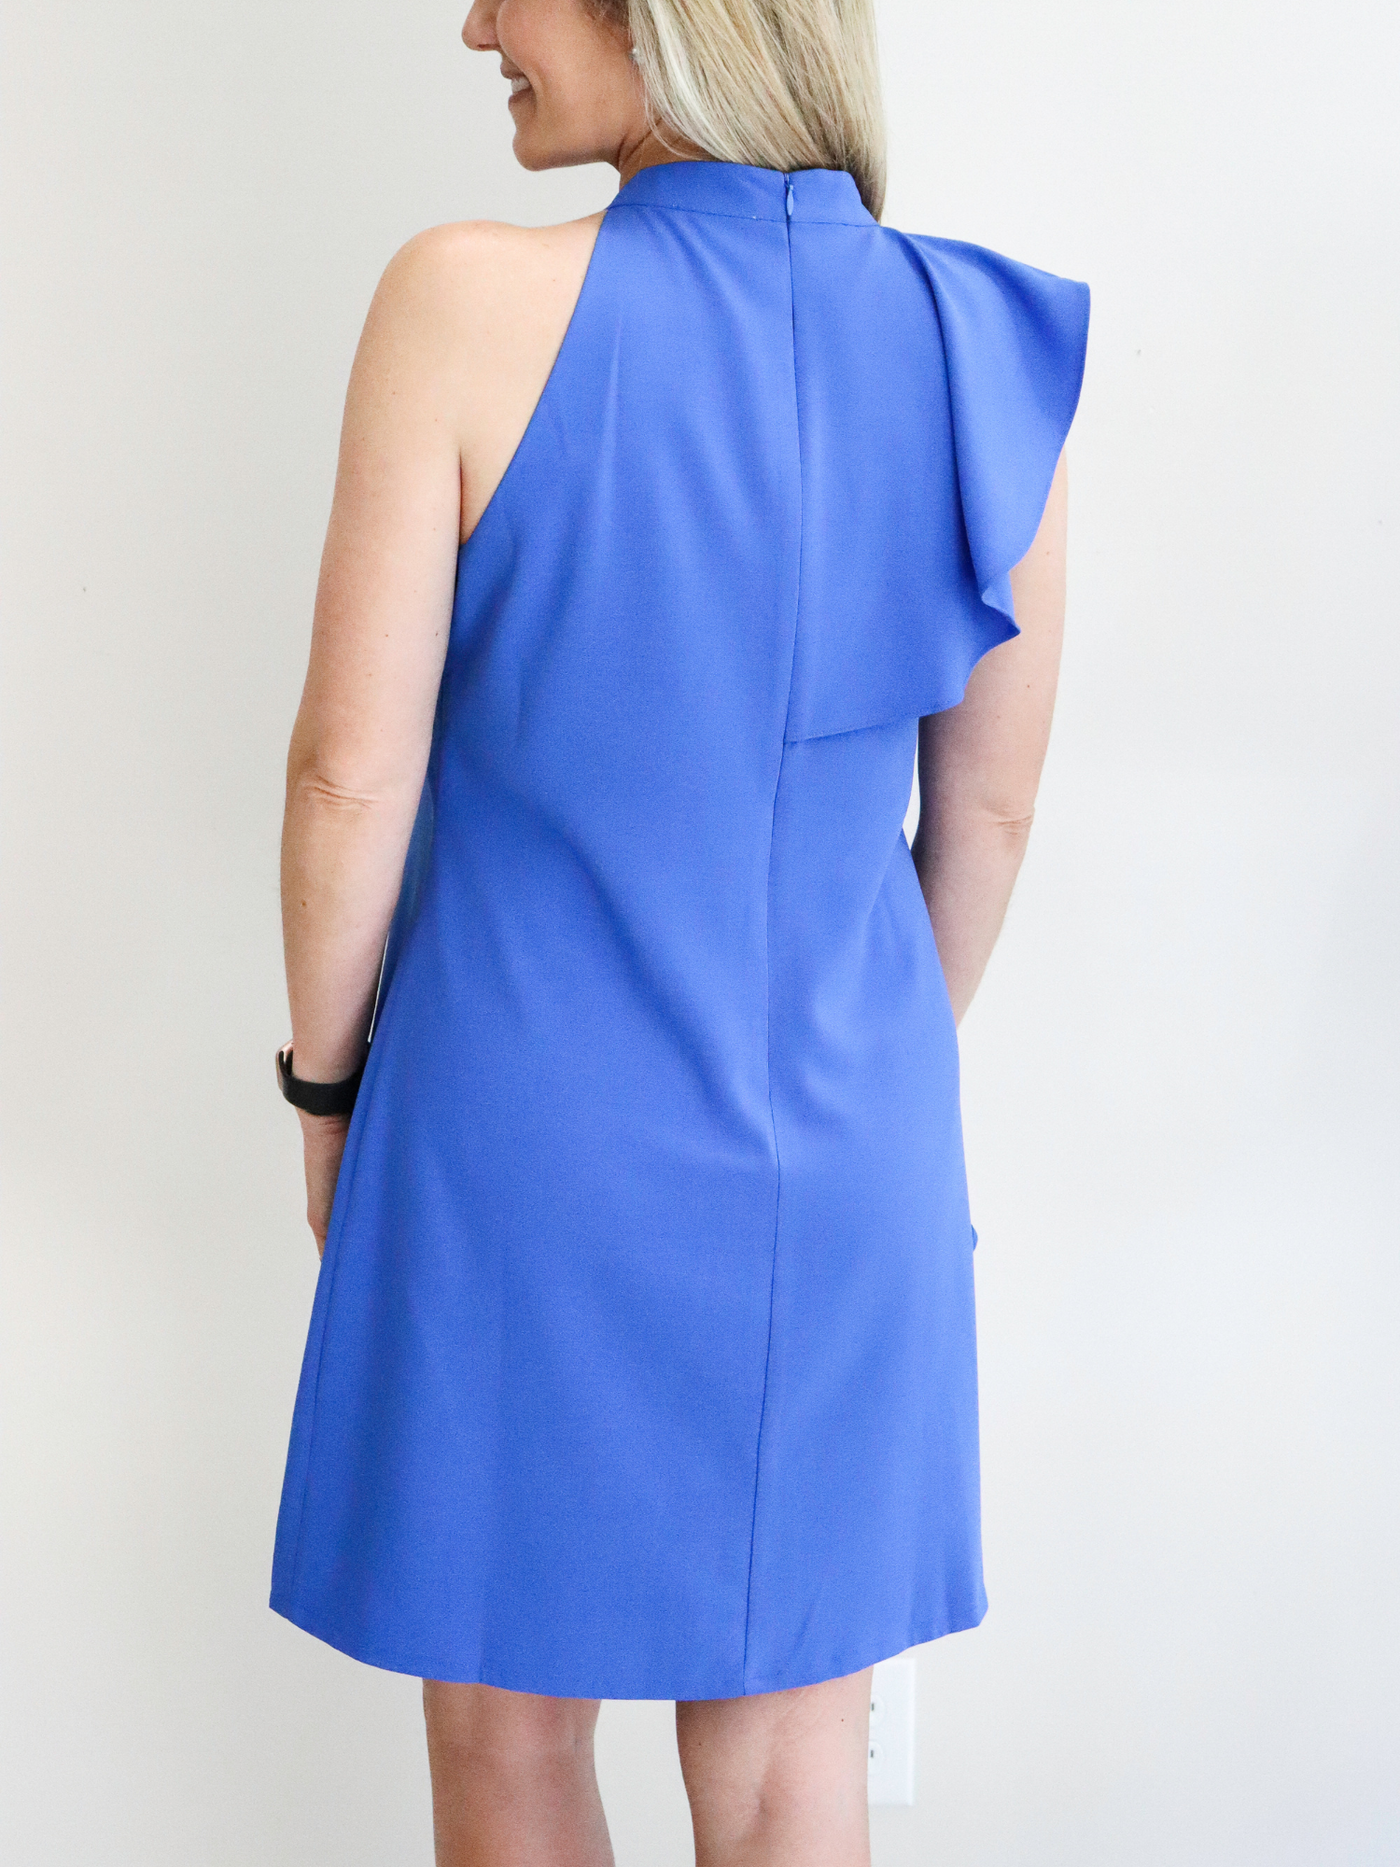 Blue One Sleeve Ruffle Dress back view.